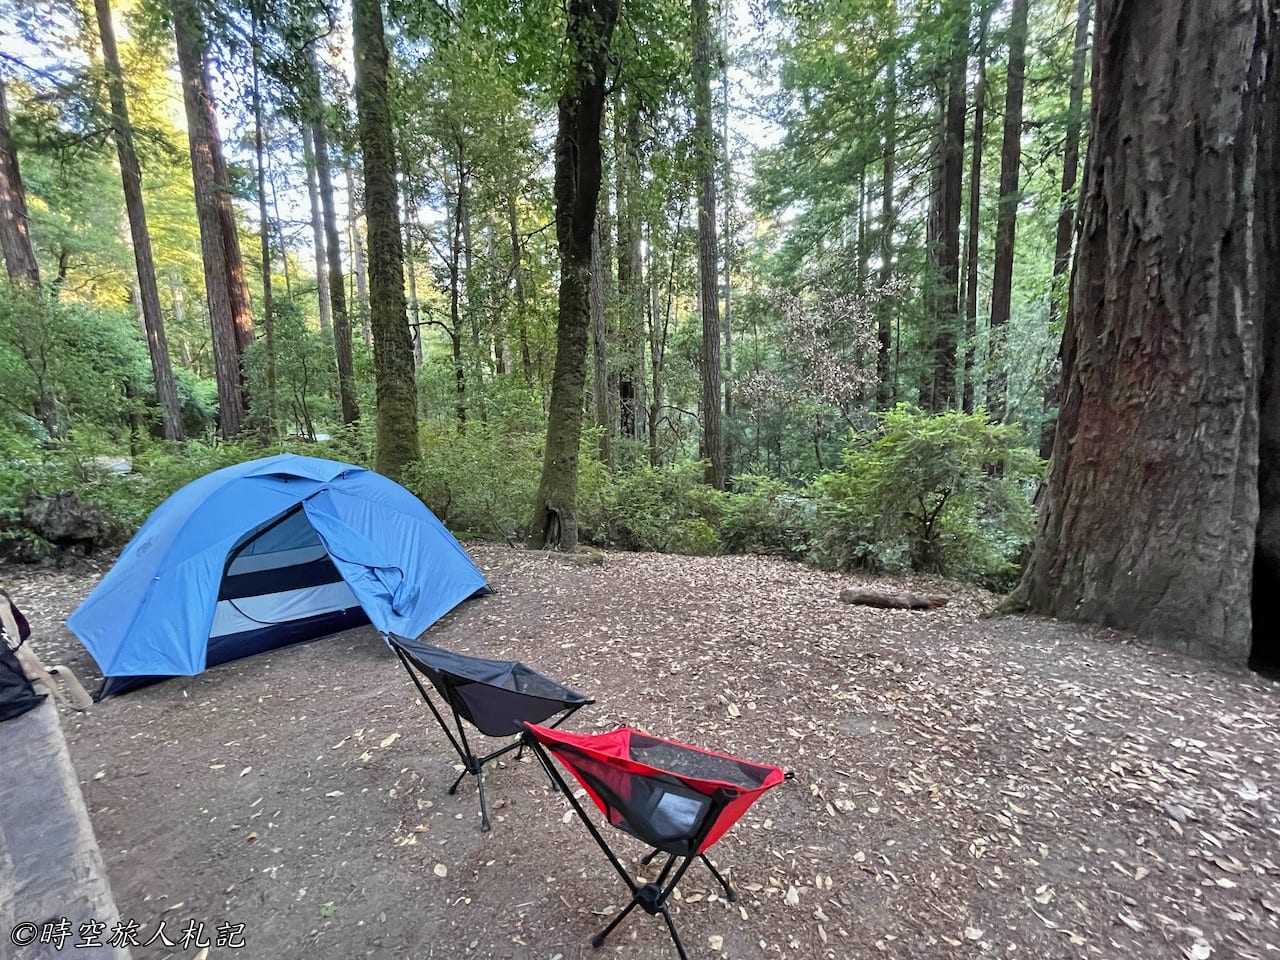 Portola redwood state park,Portola redwood campground,Tiptoe falls 4